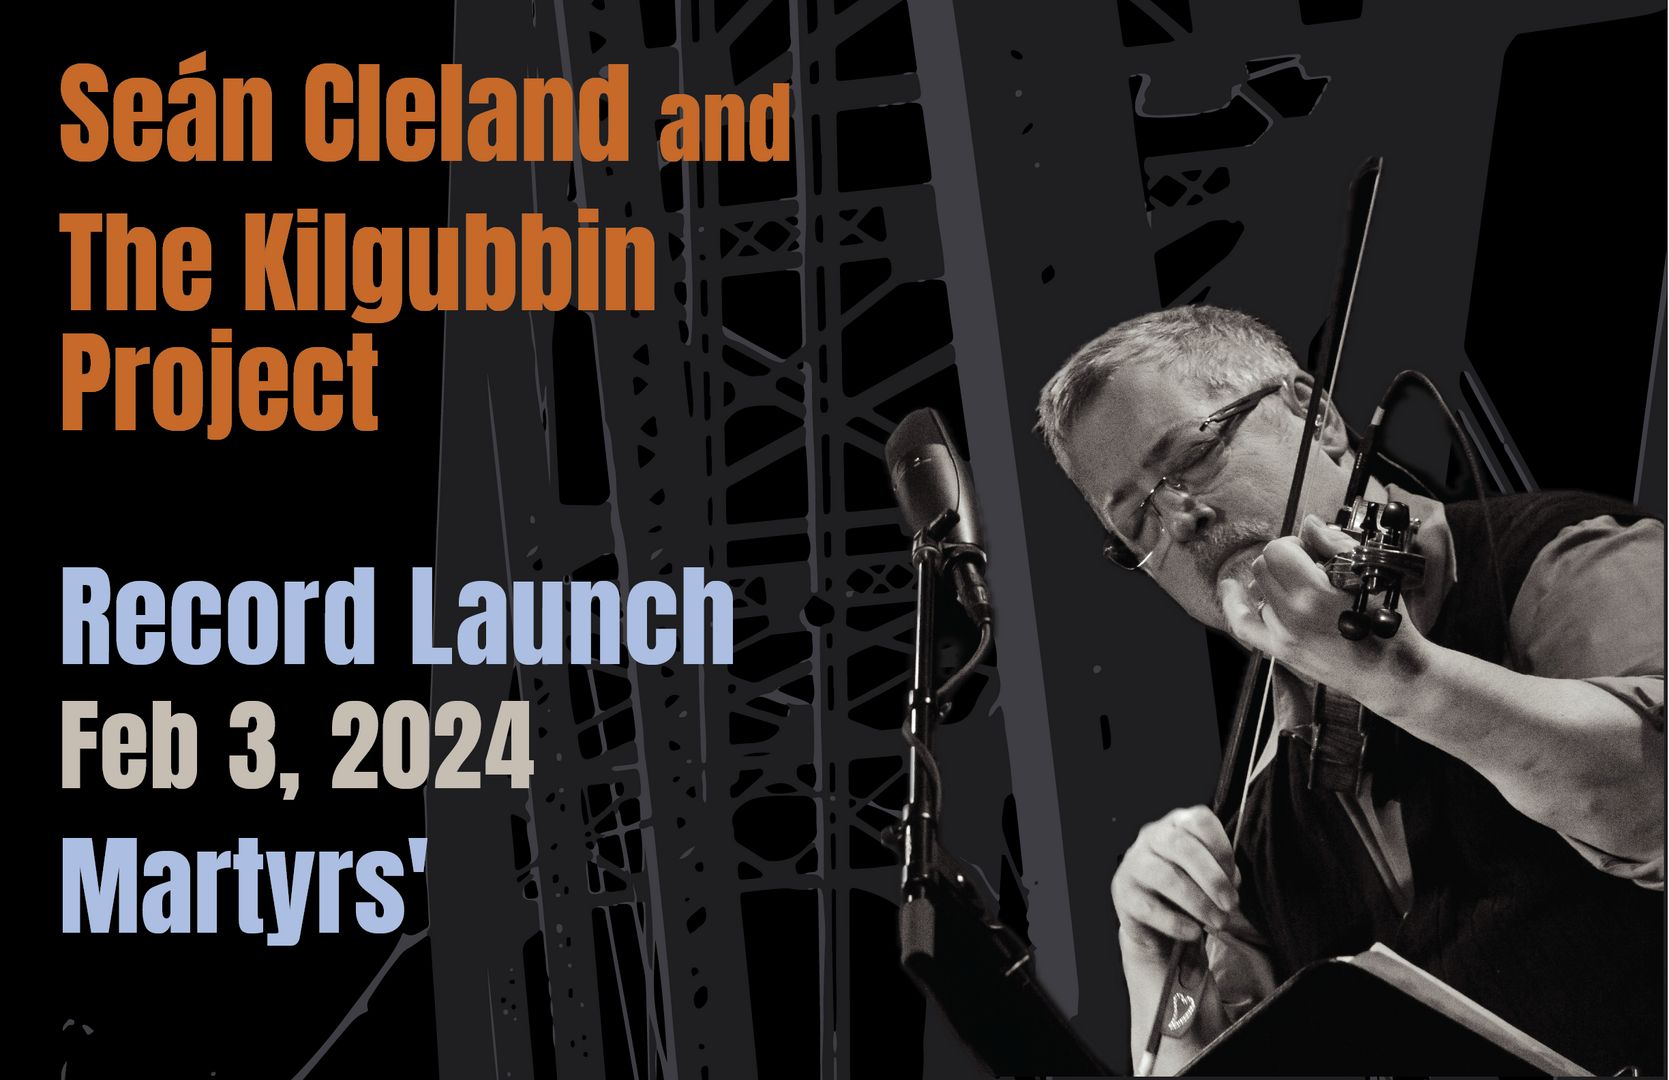 Sean Cleland and The Kilgubbin Project Album Launch Concert, Chicago, Illinois, United States